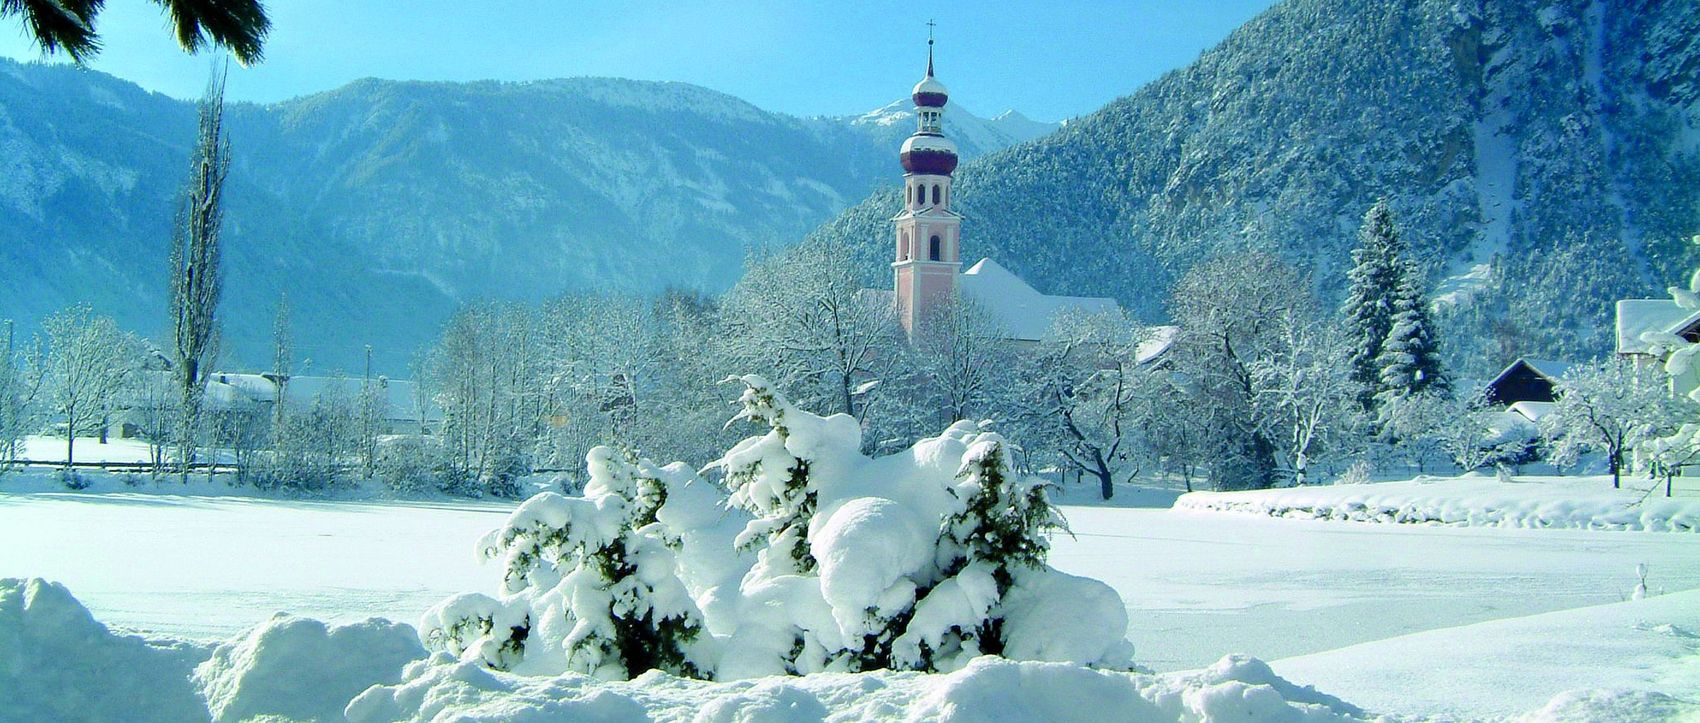 Winterlandschaft, Berge und Kirchturmspitze